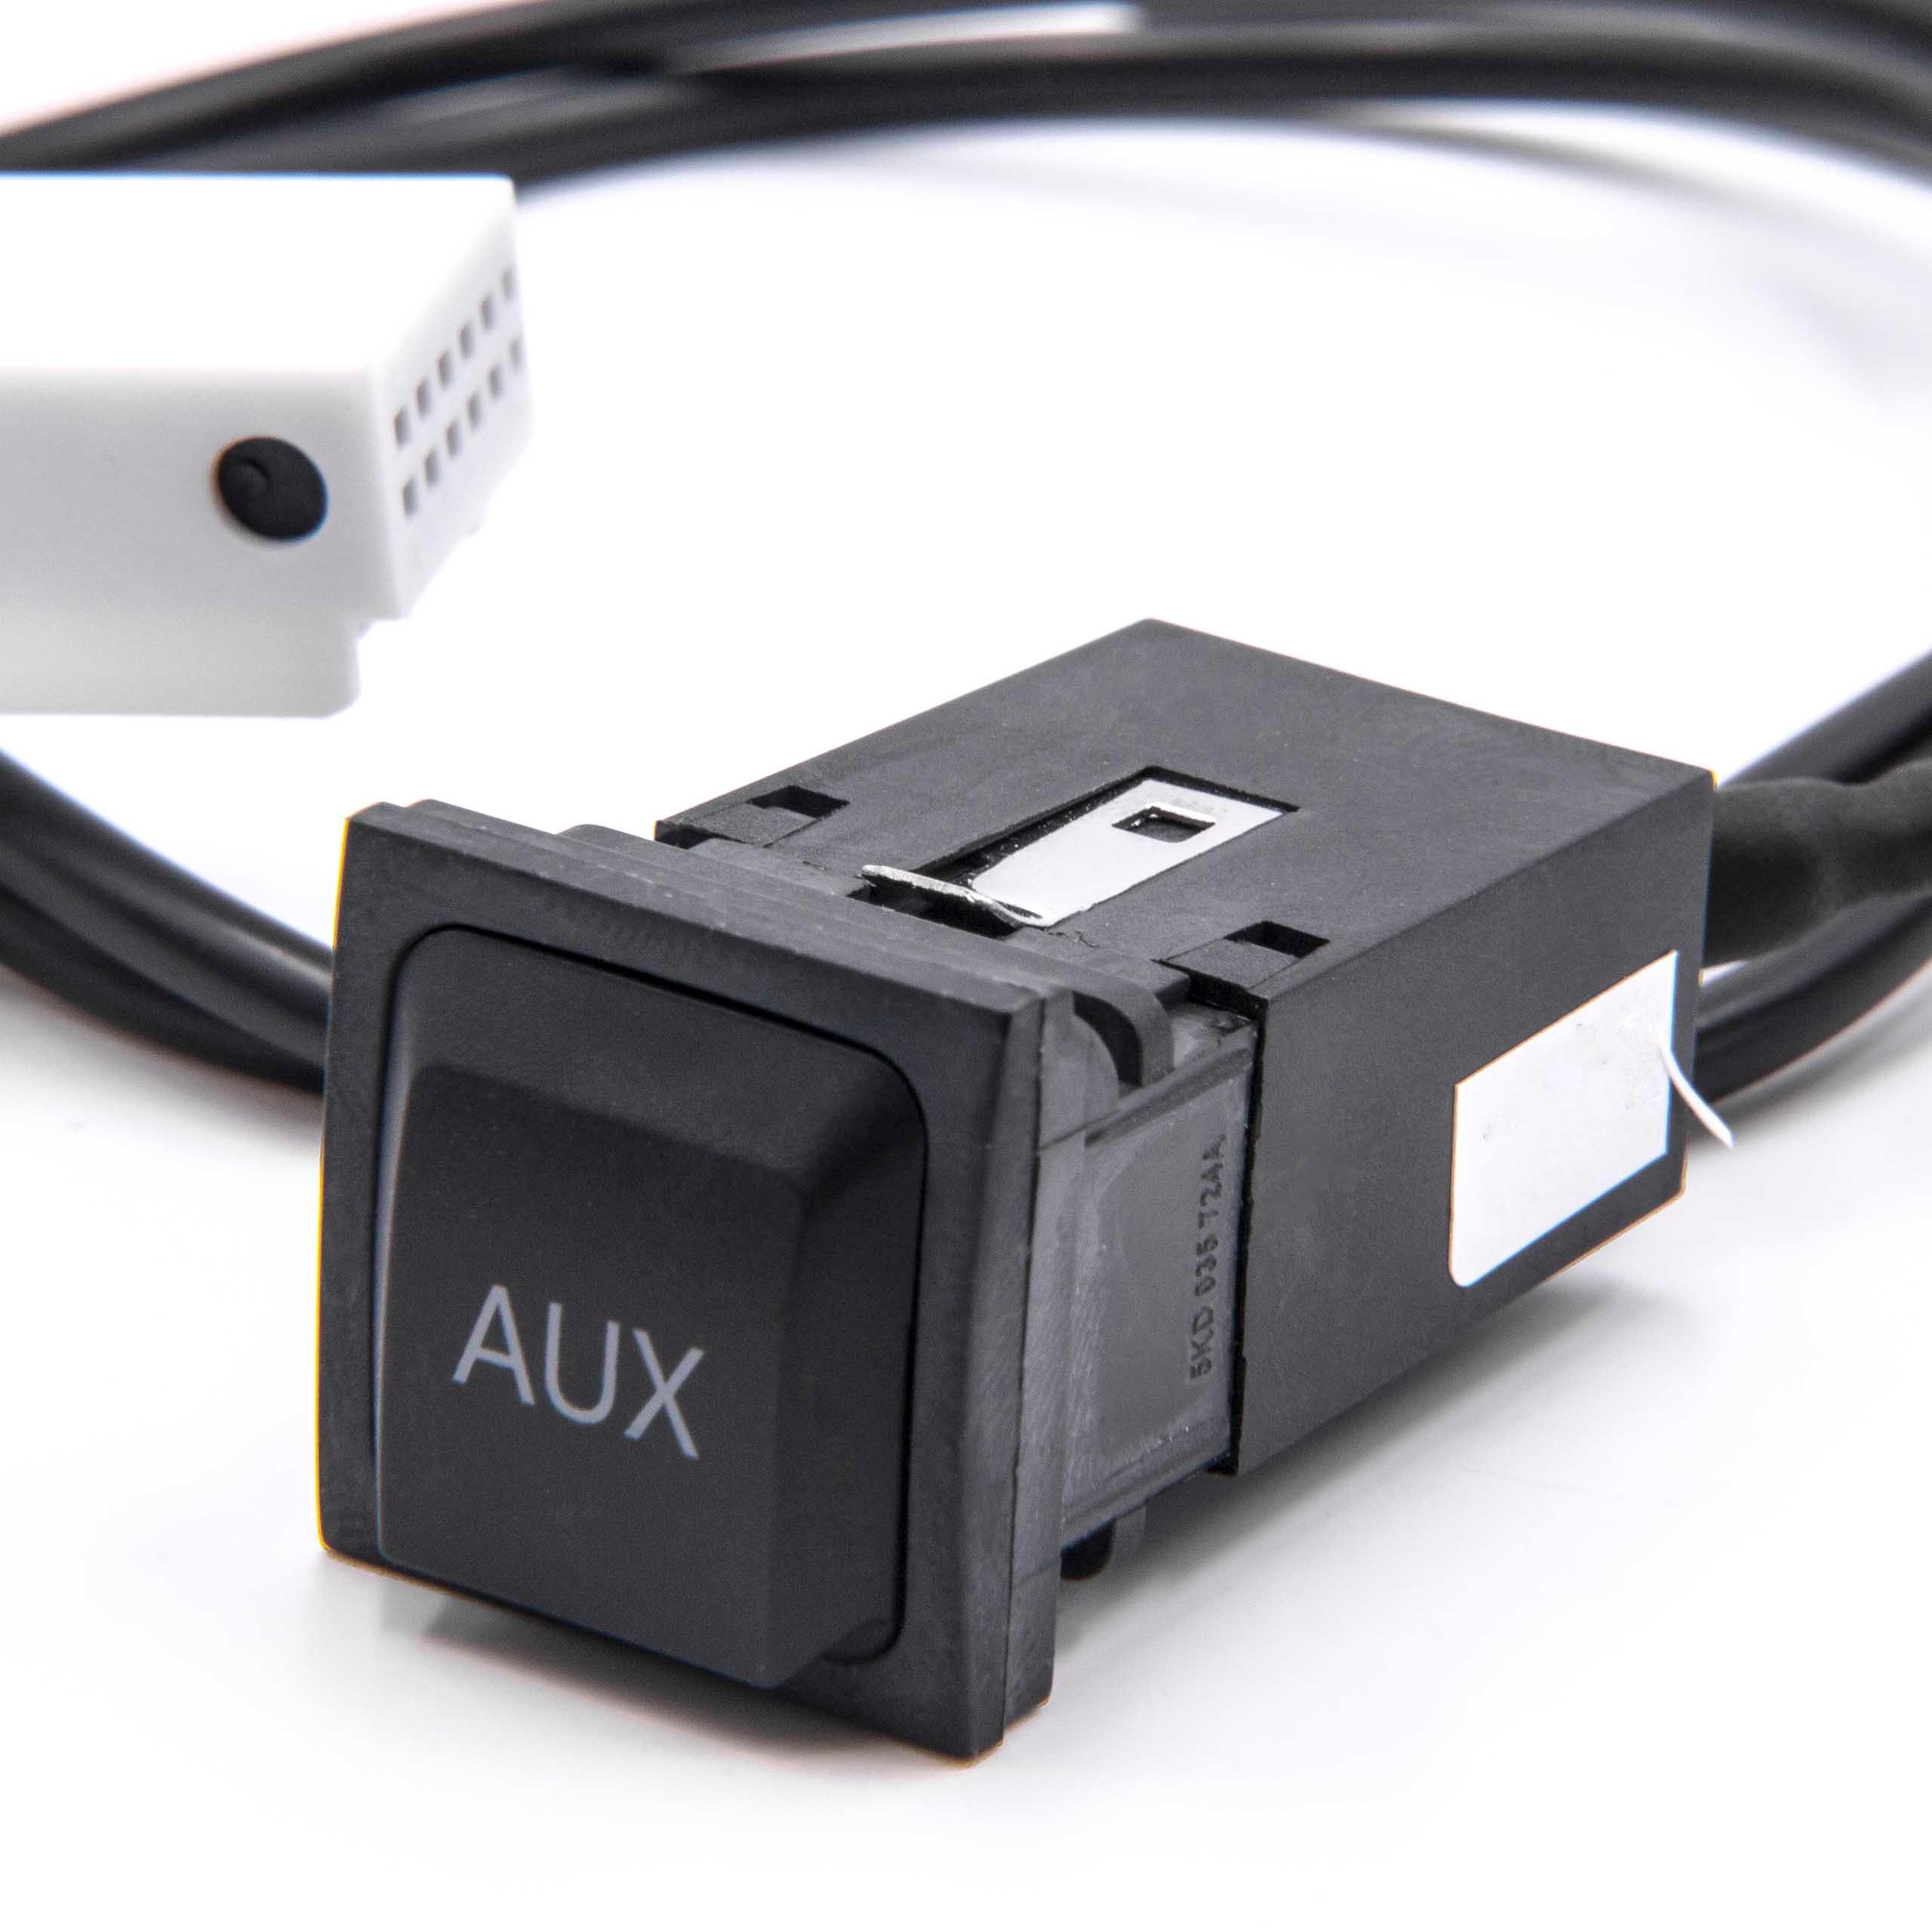 AUX Audio Adapter Cable for VW, Audi / Seat / Skoda / VW RNS310 Car Radio etc. - 120 cm